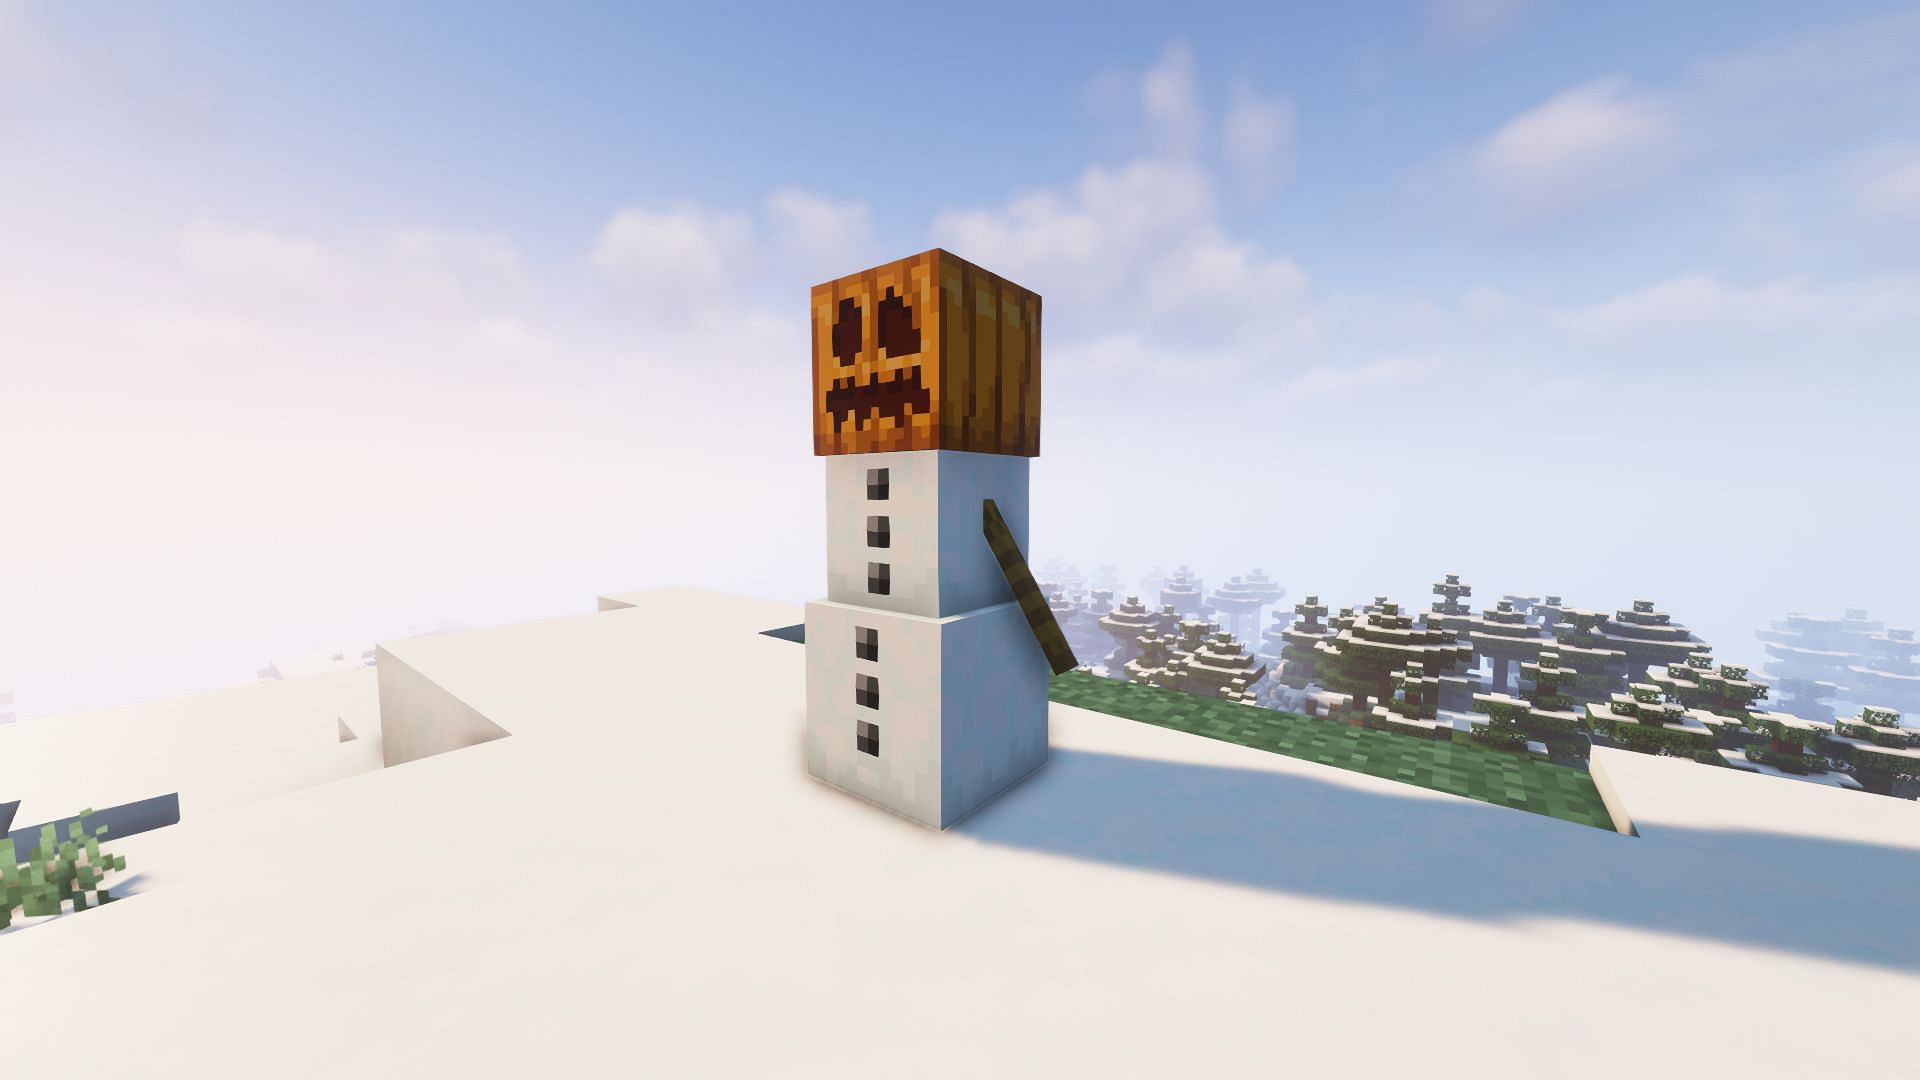 Un gólem de nieve (Imagen a través de Minecraft)